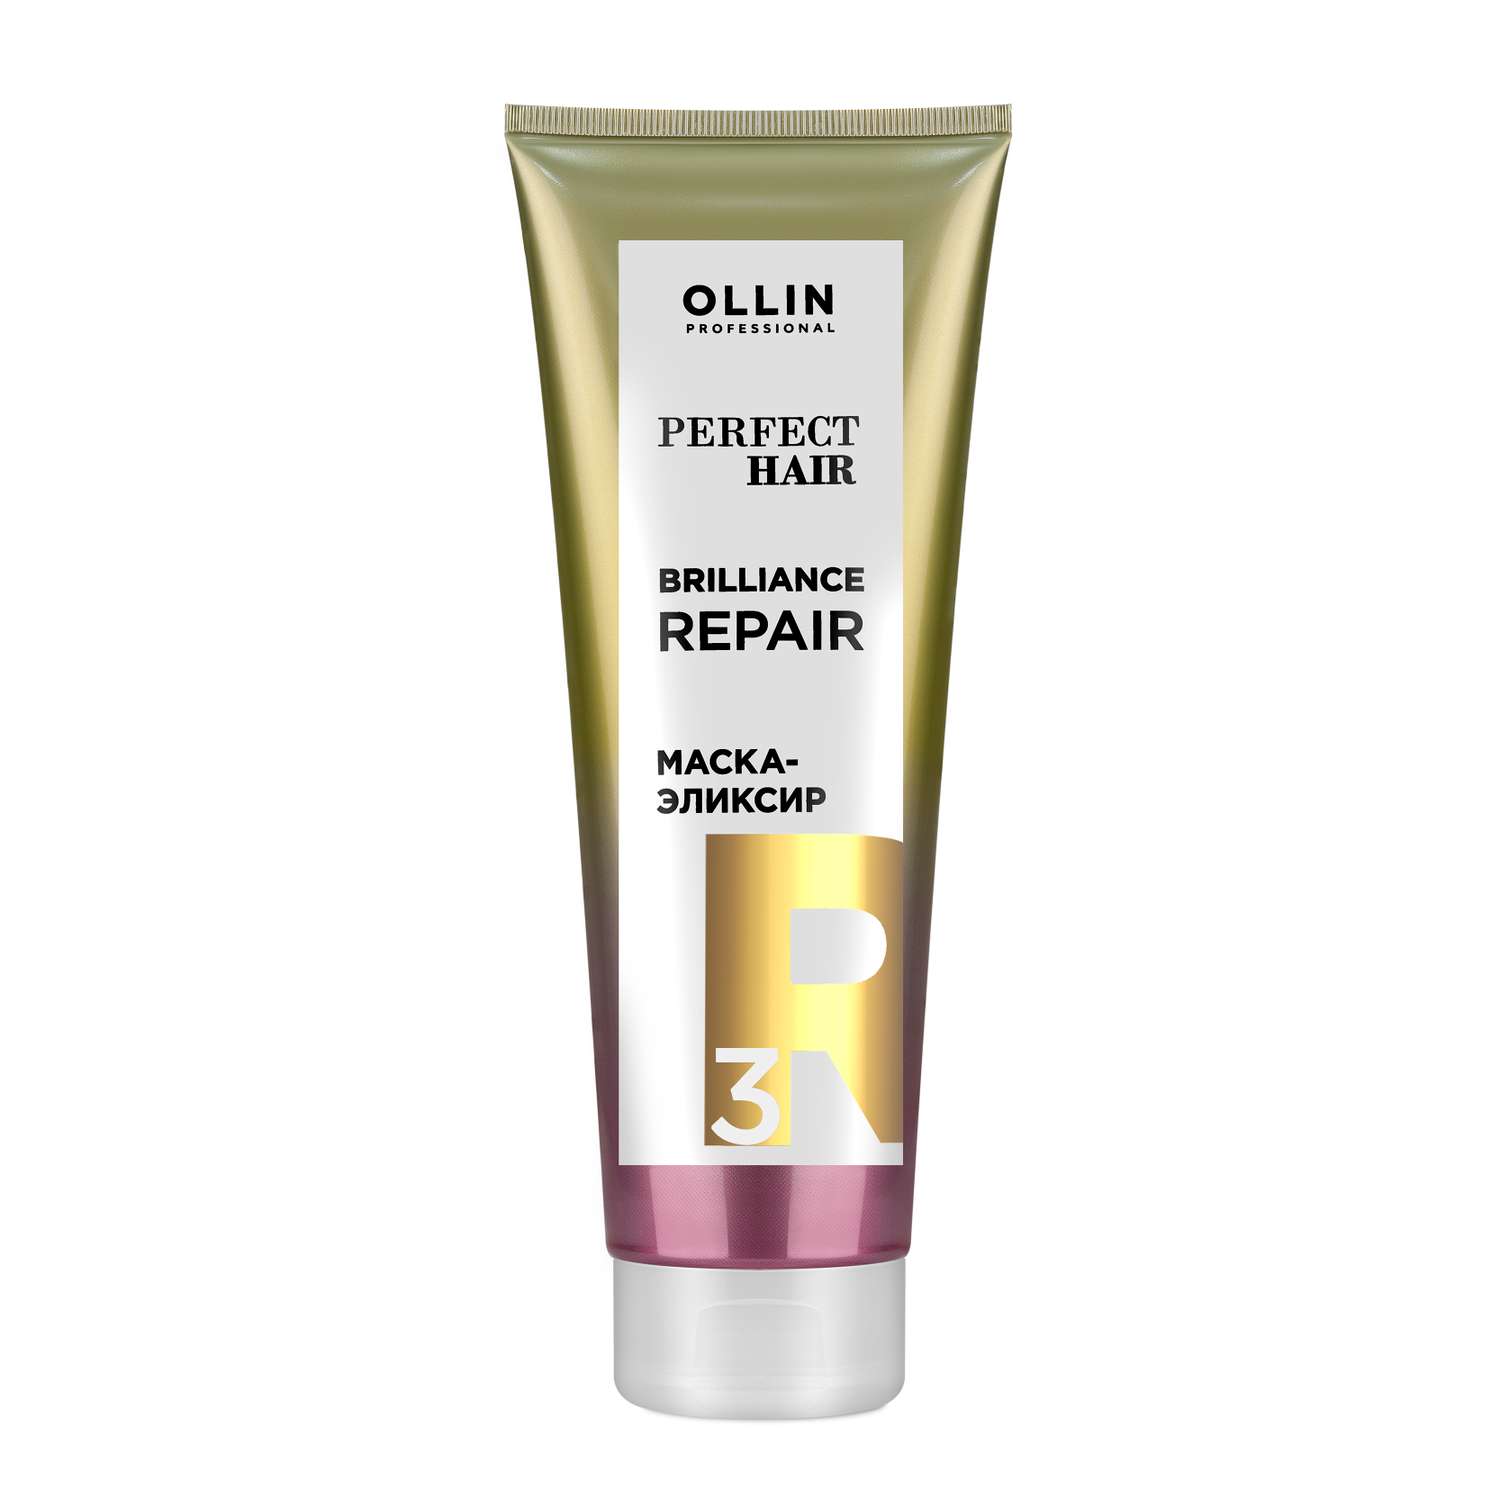 Маска-эликсир Ollin Perfect hair для восстановления волос brilliance repair step 3 250 мл - фото 1